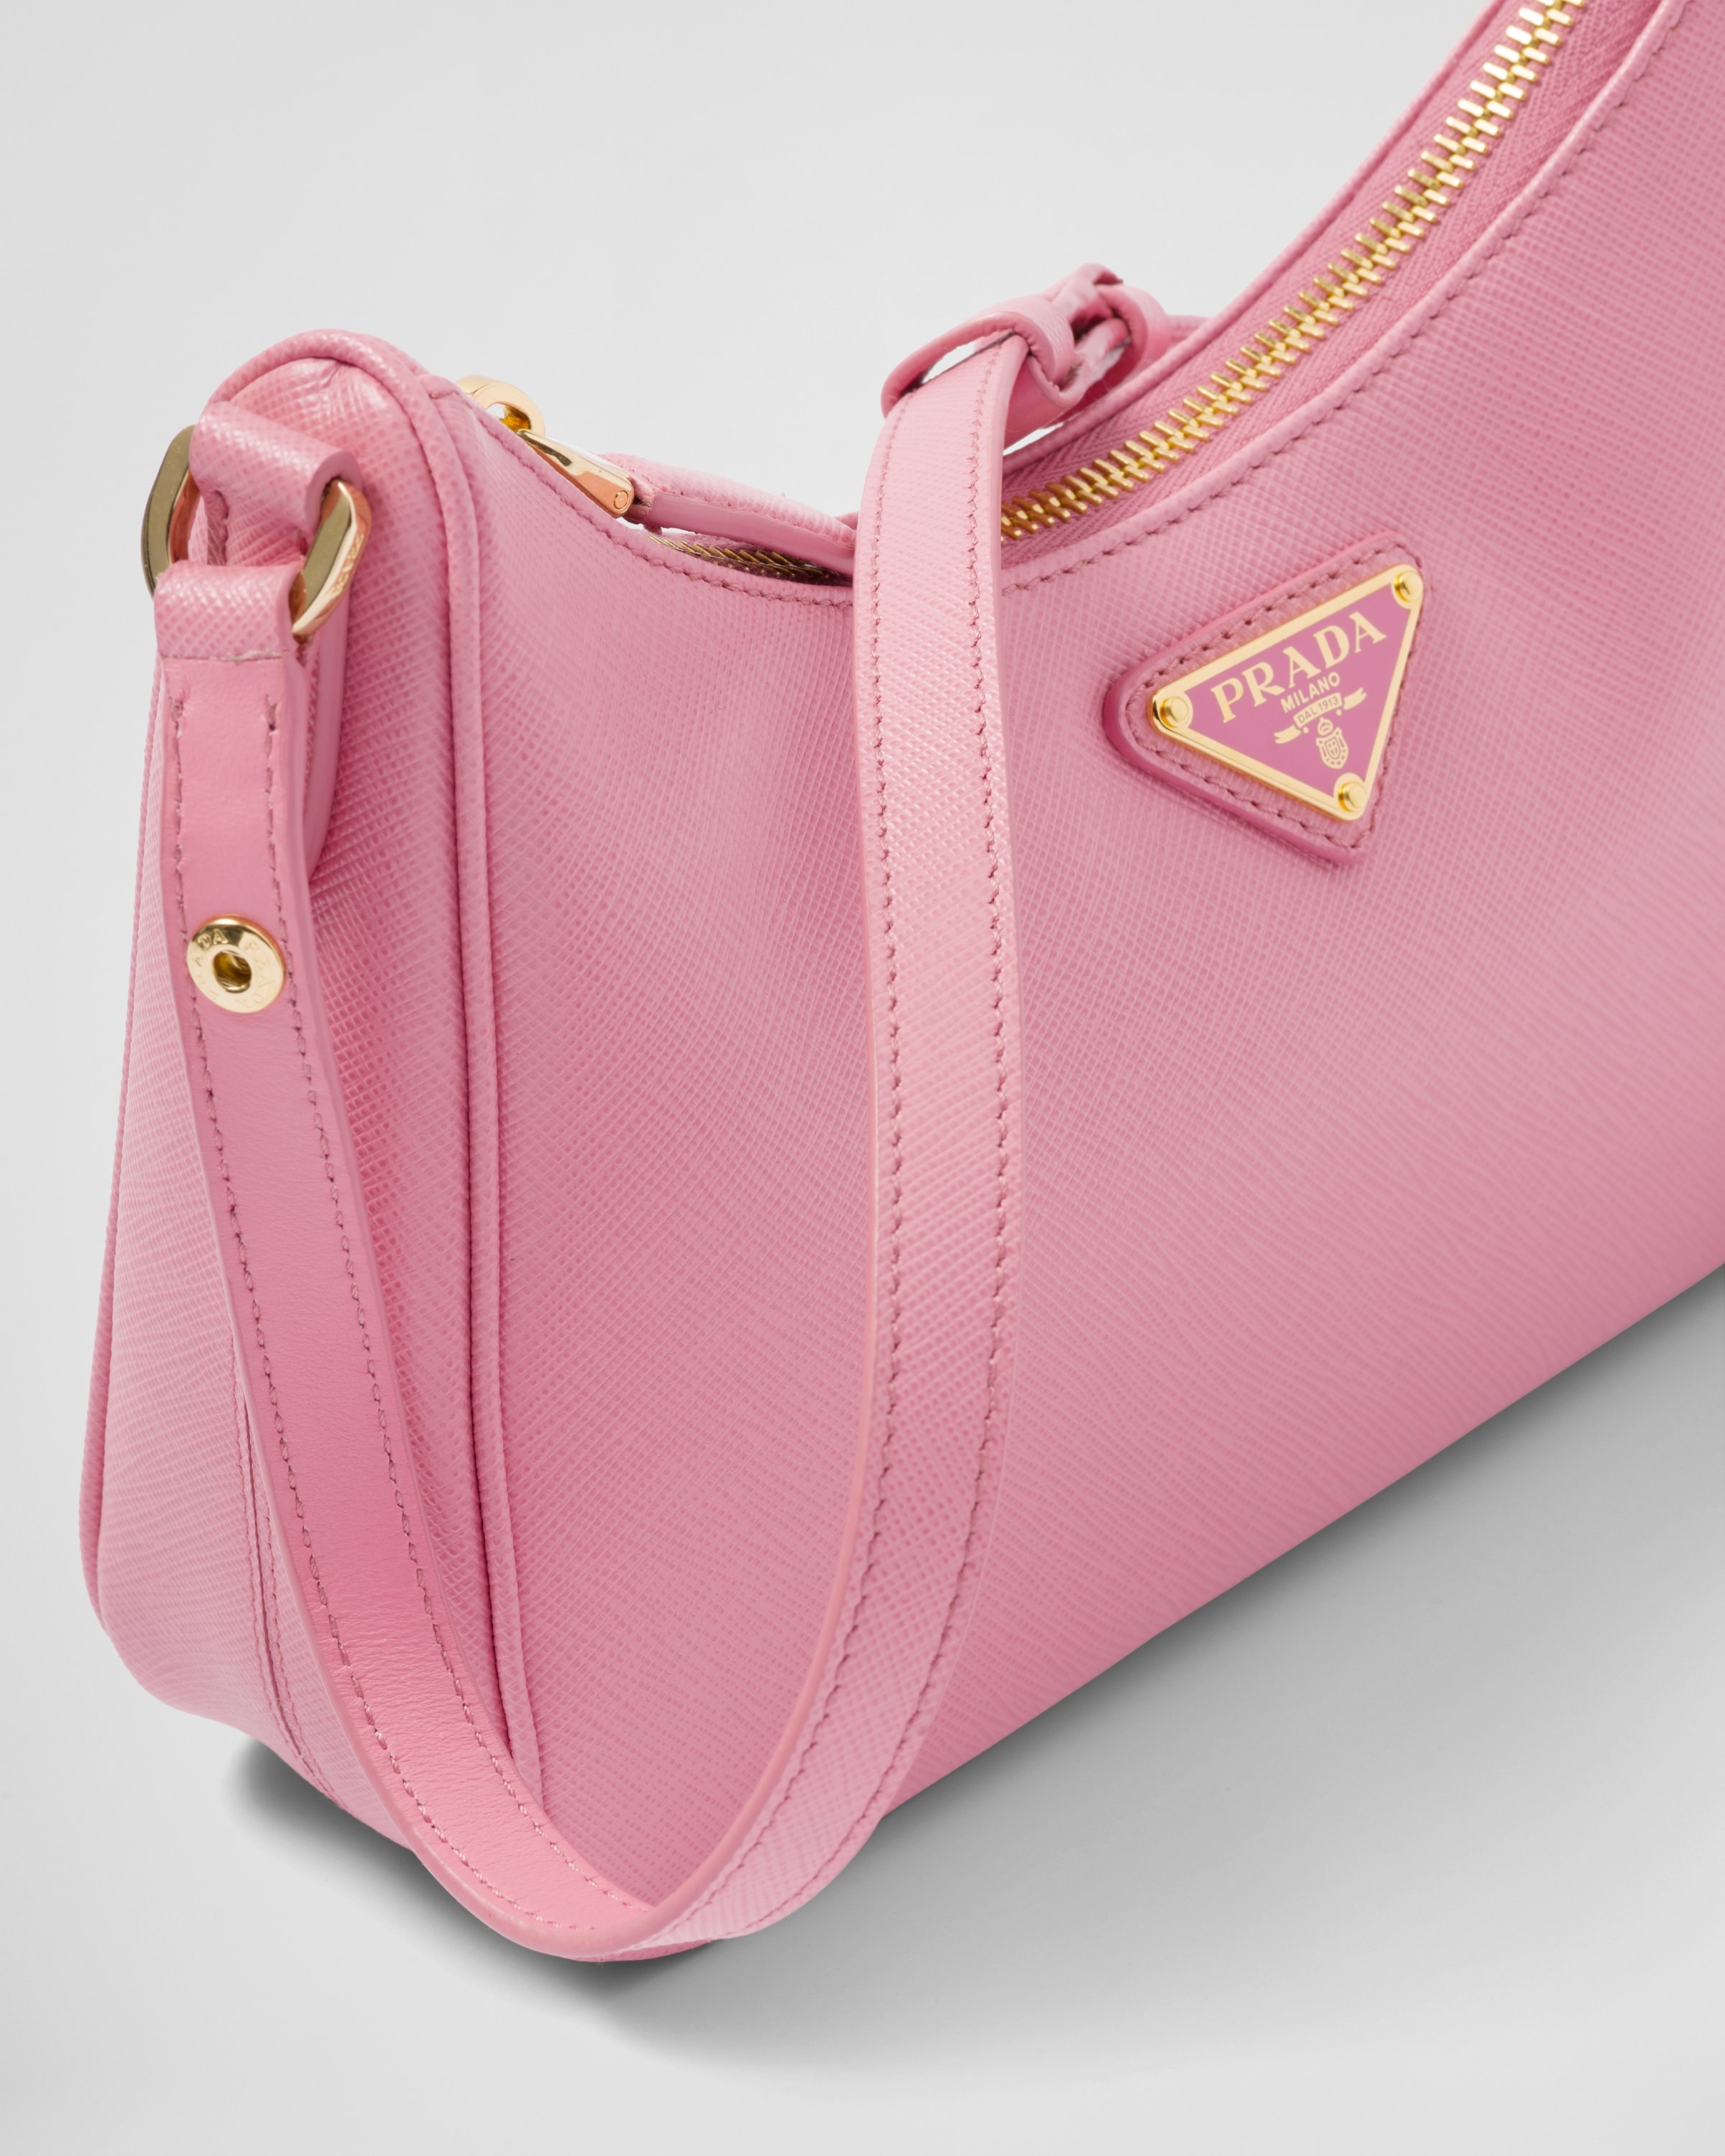 Prada Re-Edition Saffiano leather mini-bag